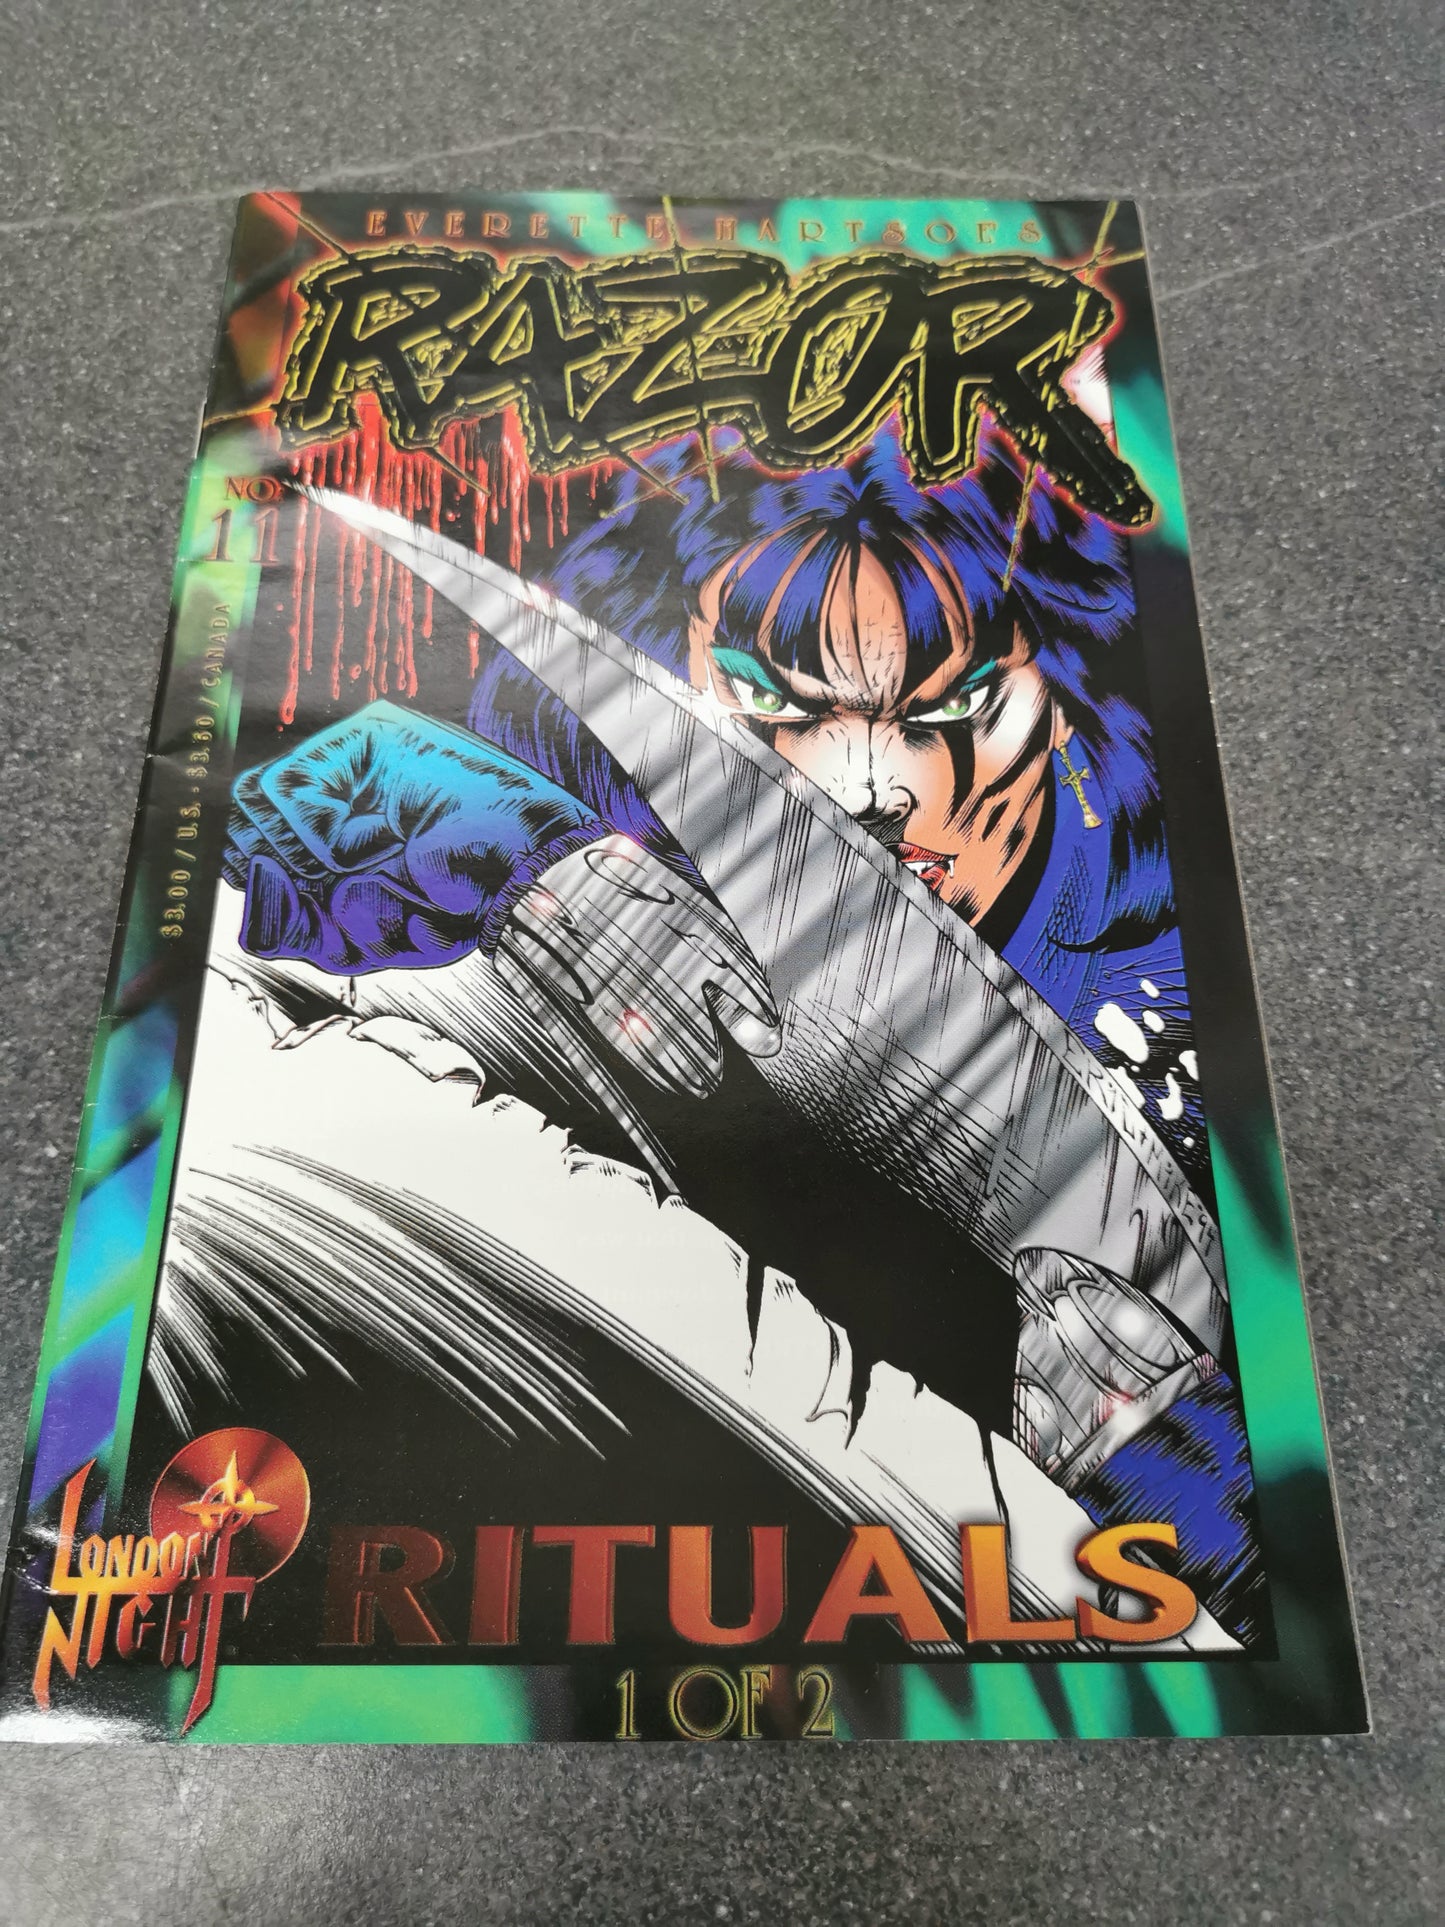 Razor Uncut Rituals set of 2 #11 and #12 1995 London Night Studios comic